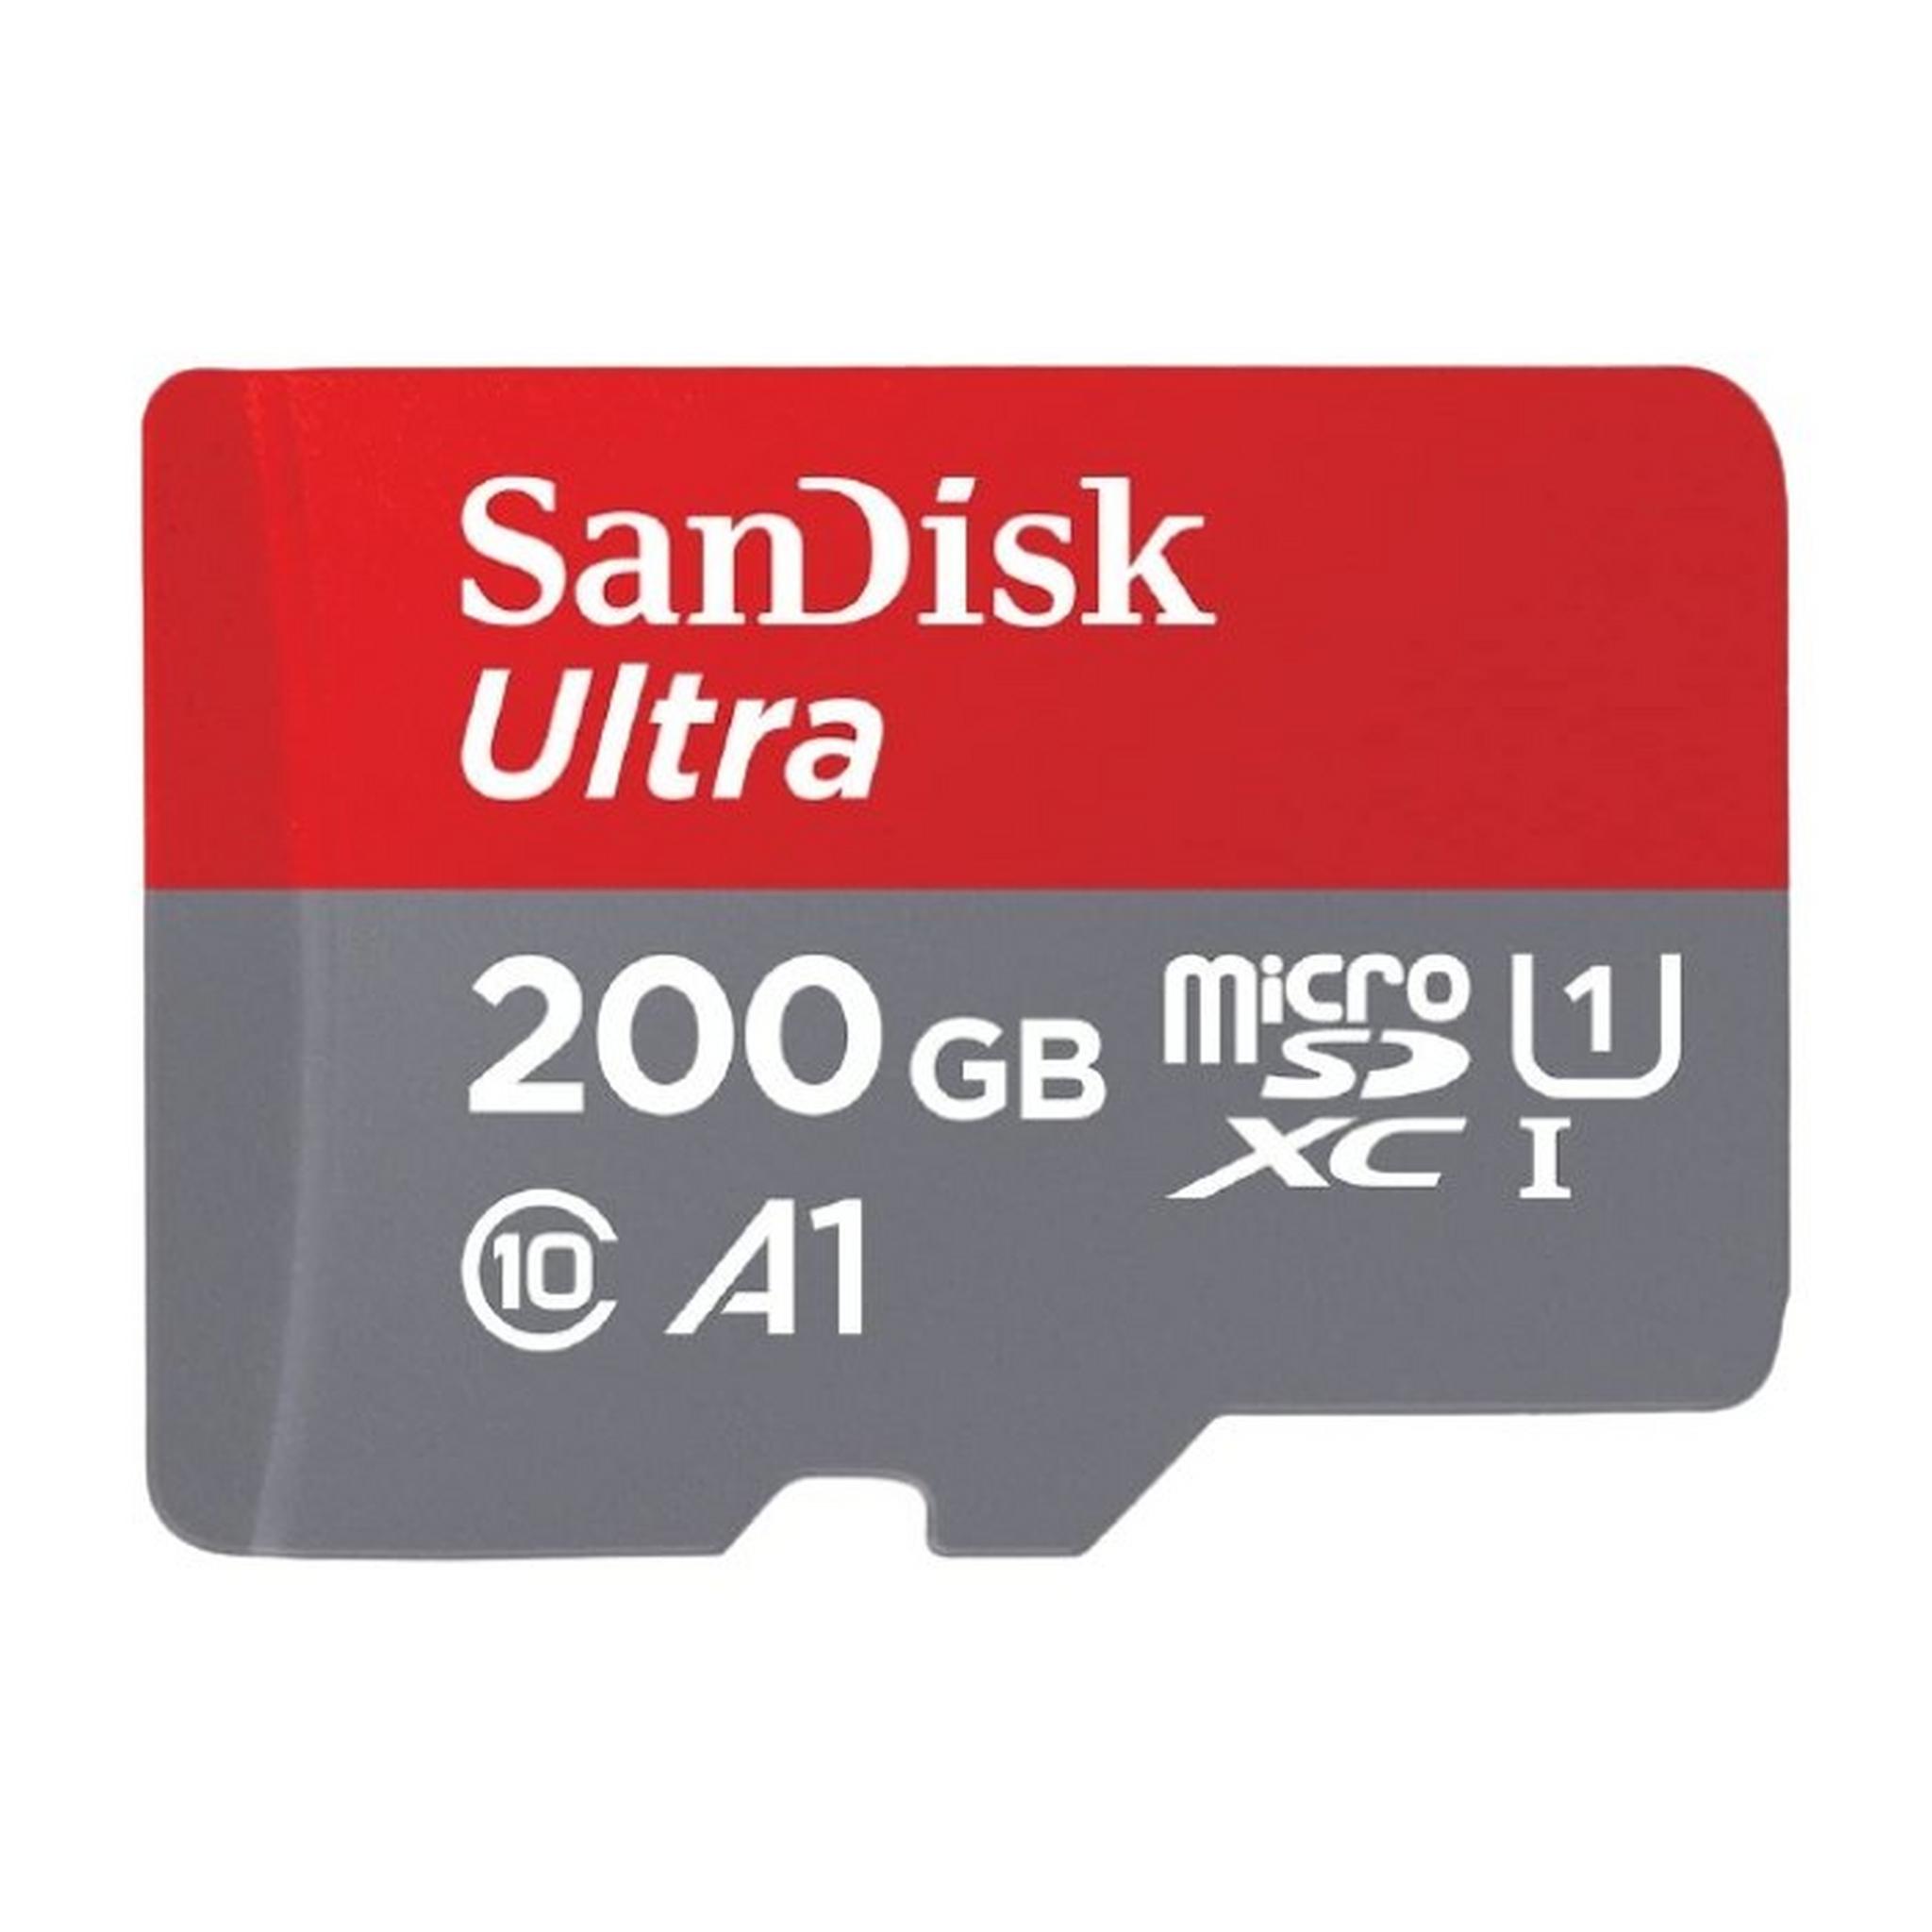 SanDisk Ultra MicroSDXC 200GB UHS-I 120MB/S Memory Card